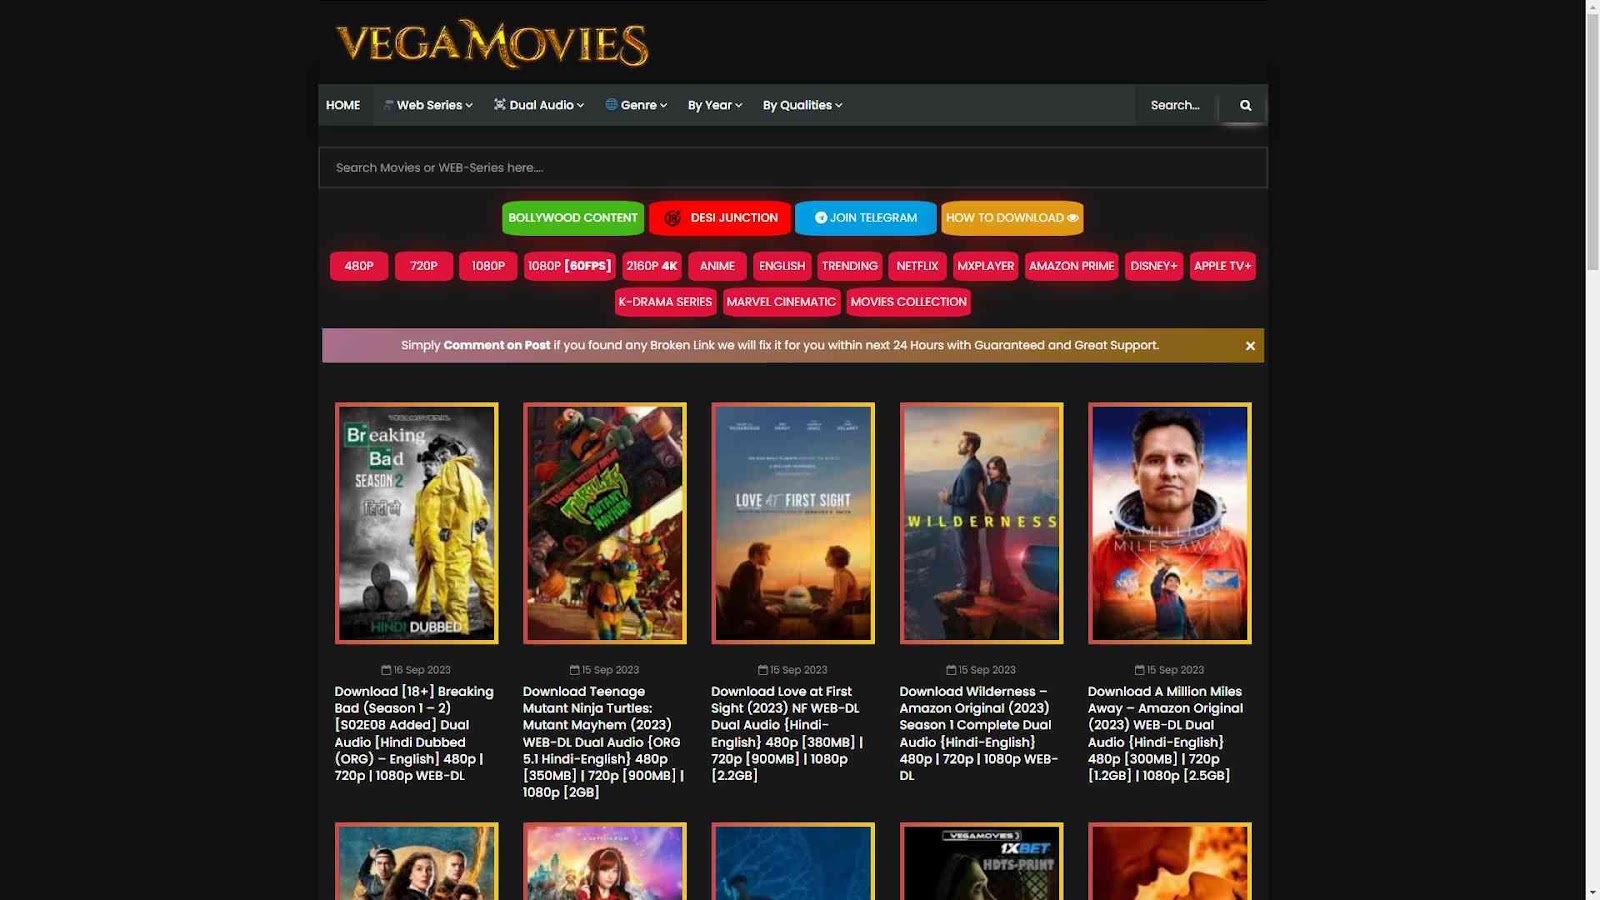 Vegamovies: Your Gateway to a World of Entertainment